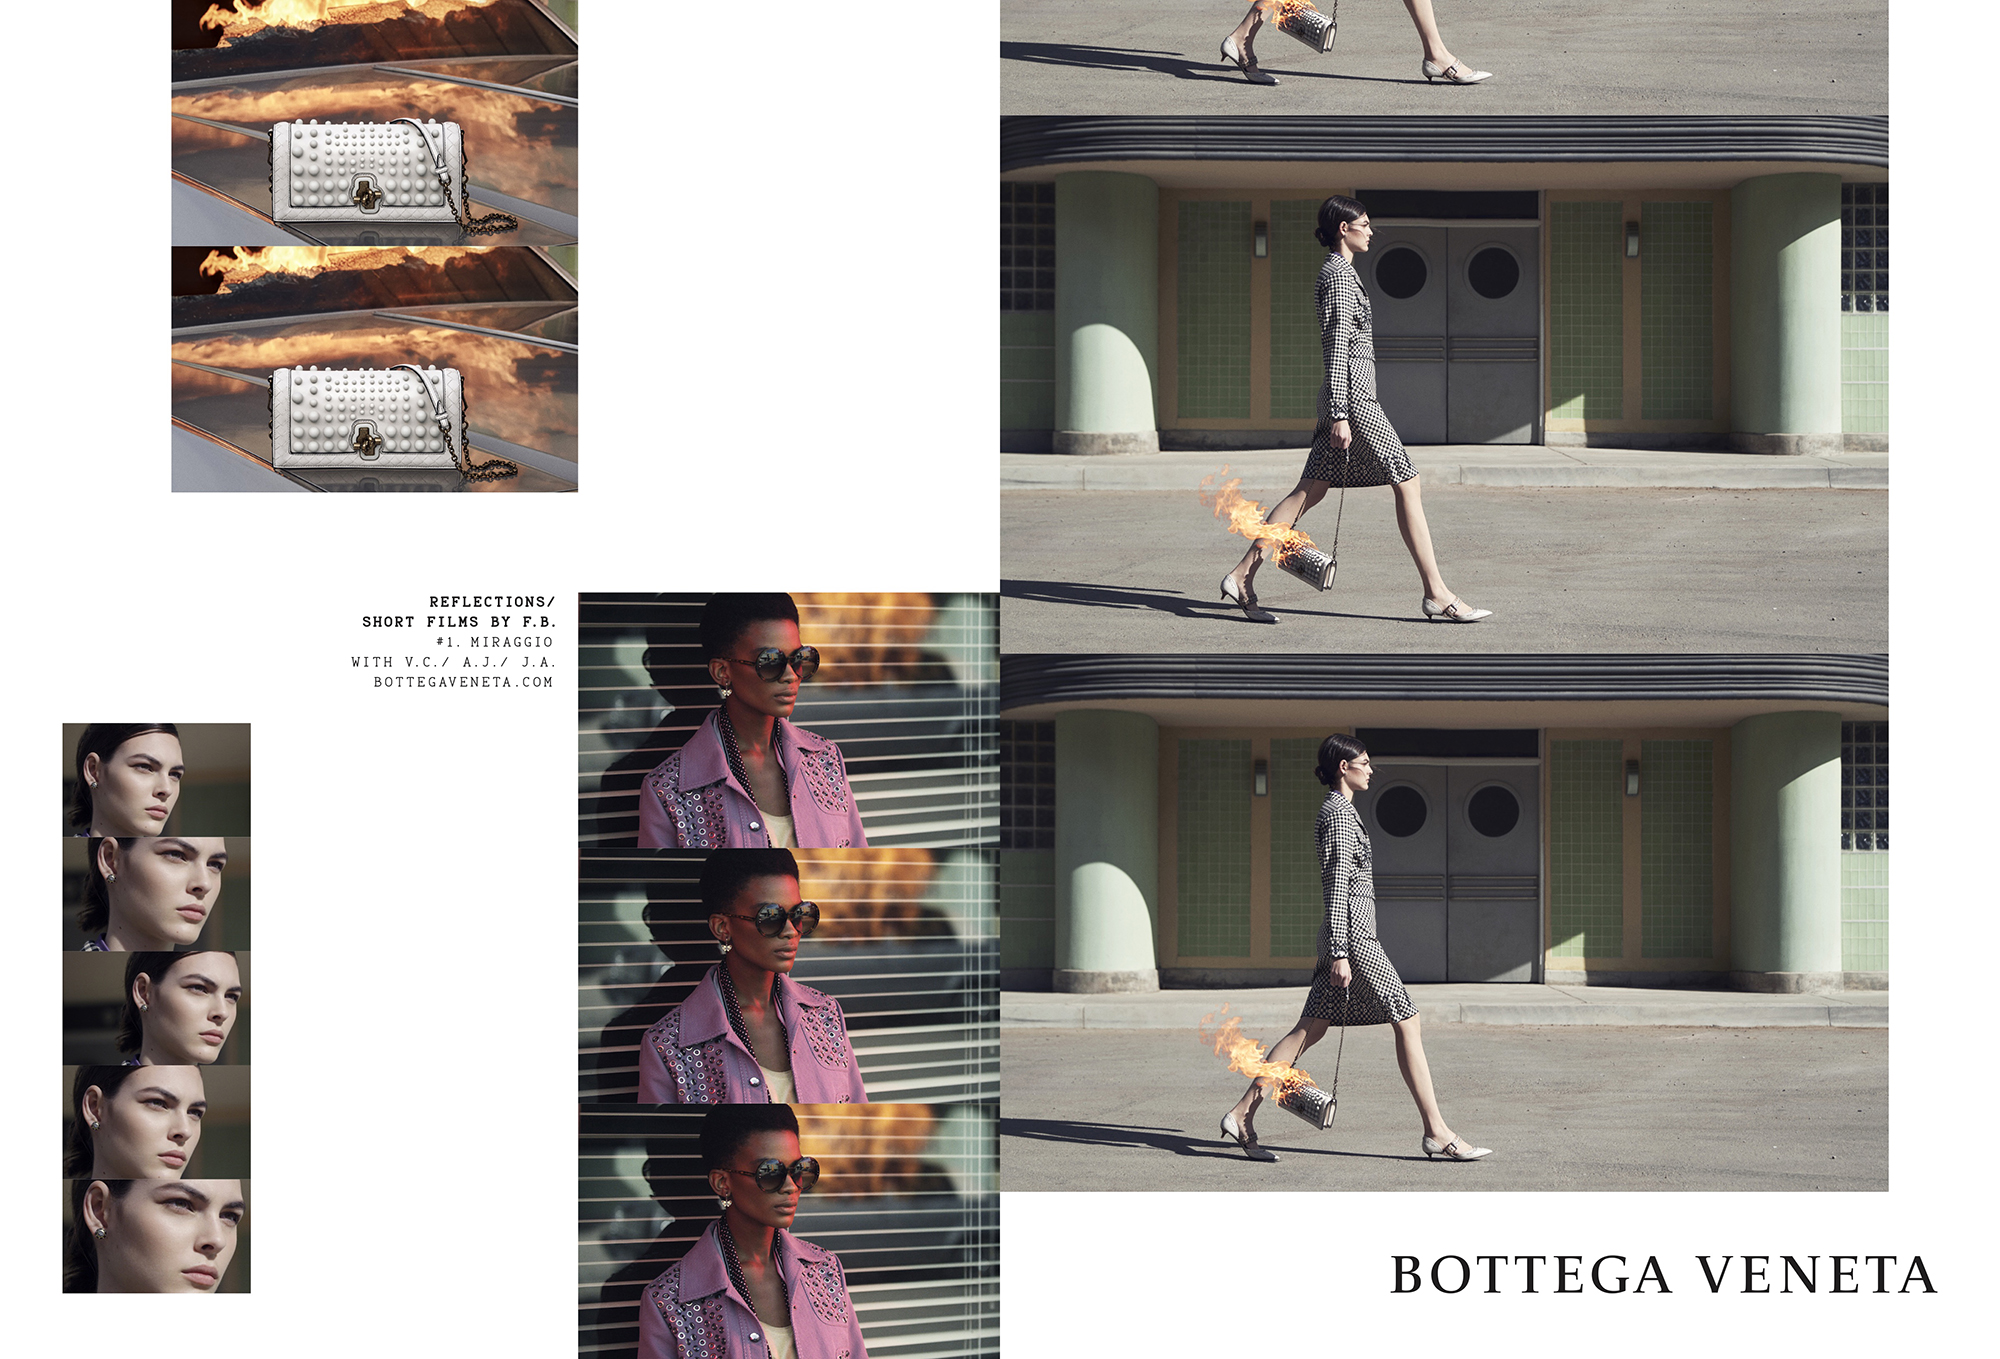 BOTTEGA VENETA重新打造“合作的艺术”——2018 春夏系列广告特辑“数字优先” 